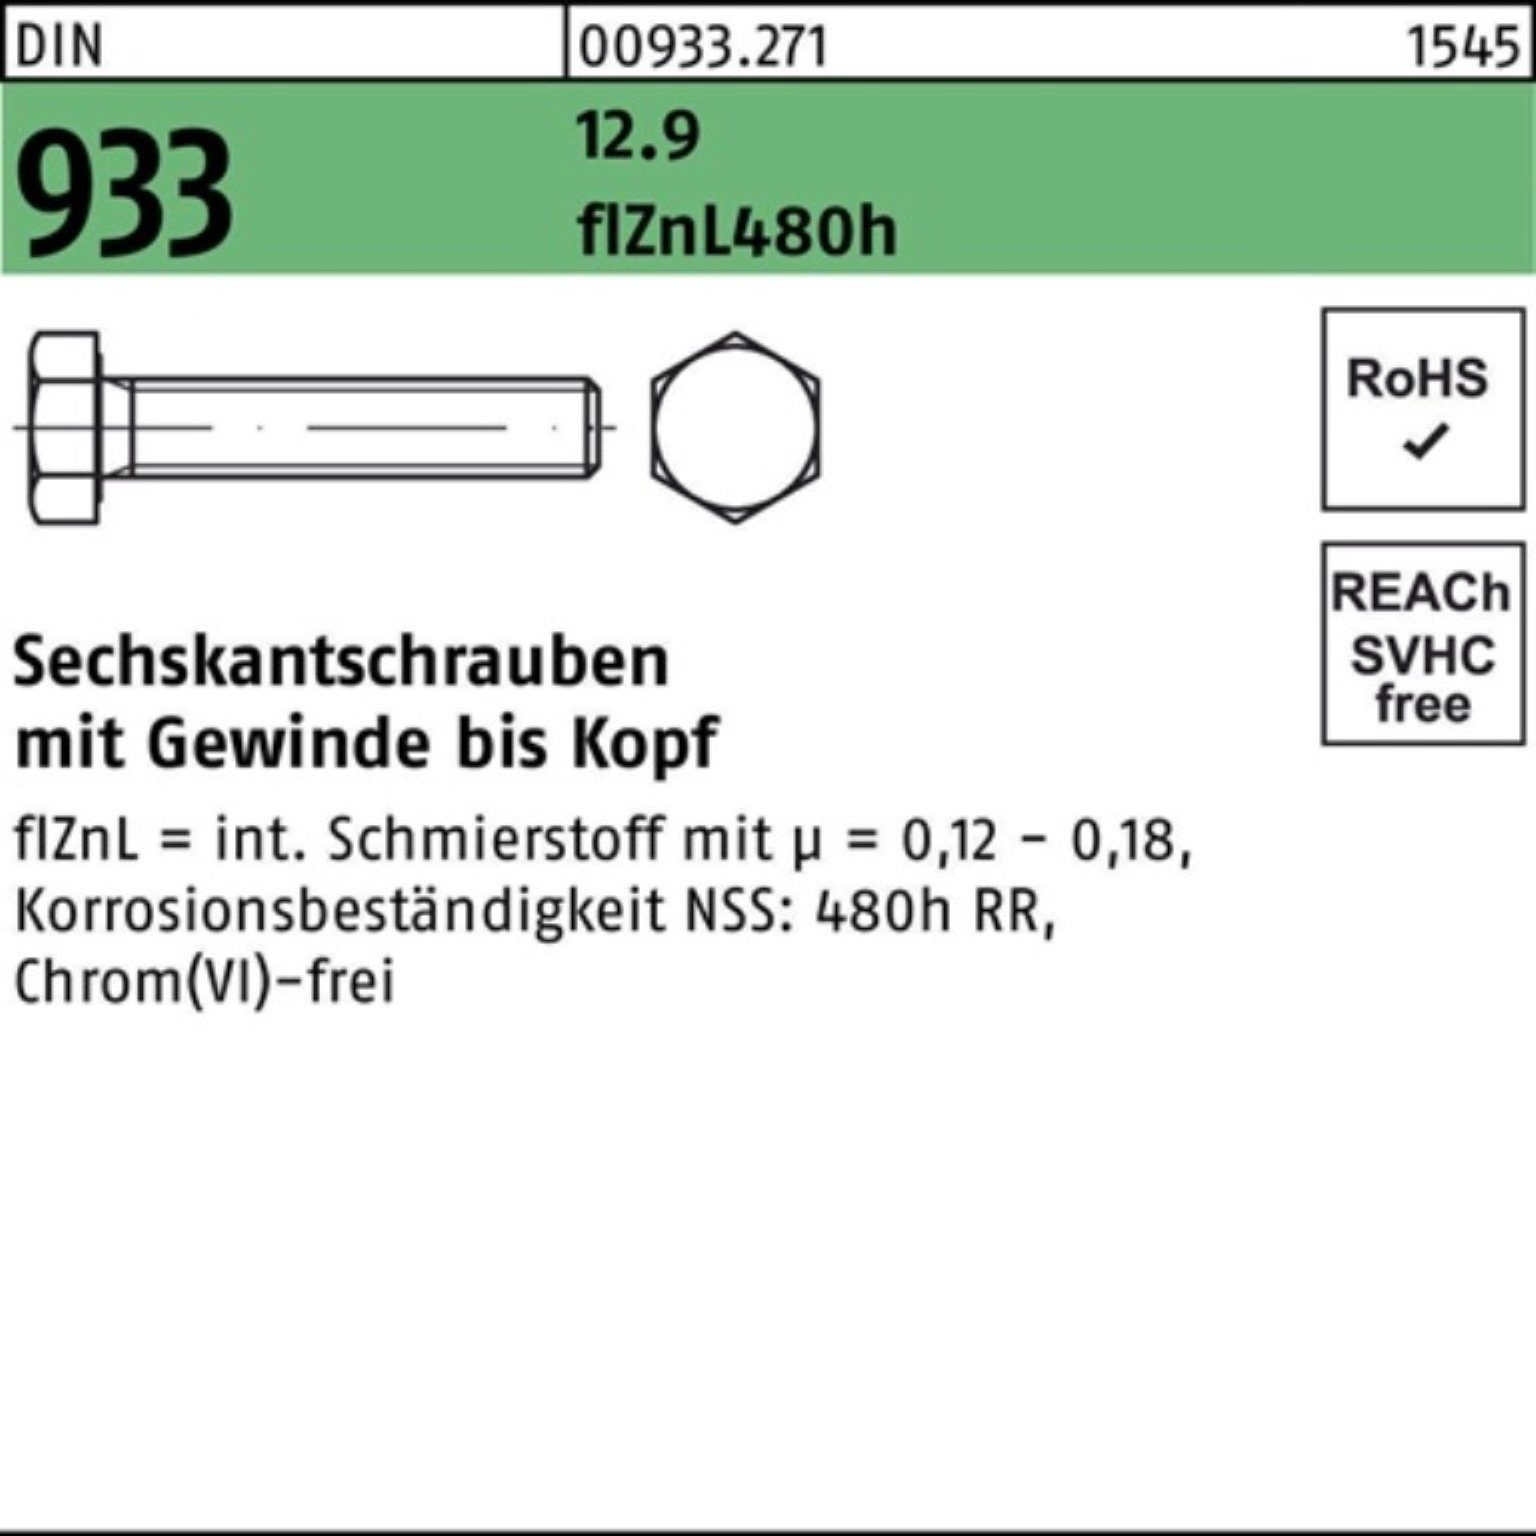 Reyher Sechskantschraube 100er Pack zinkla 480h VG 933 flZnL M20x Sechskantschraube DIN 12.9 60